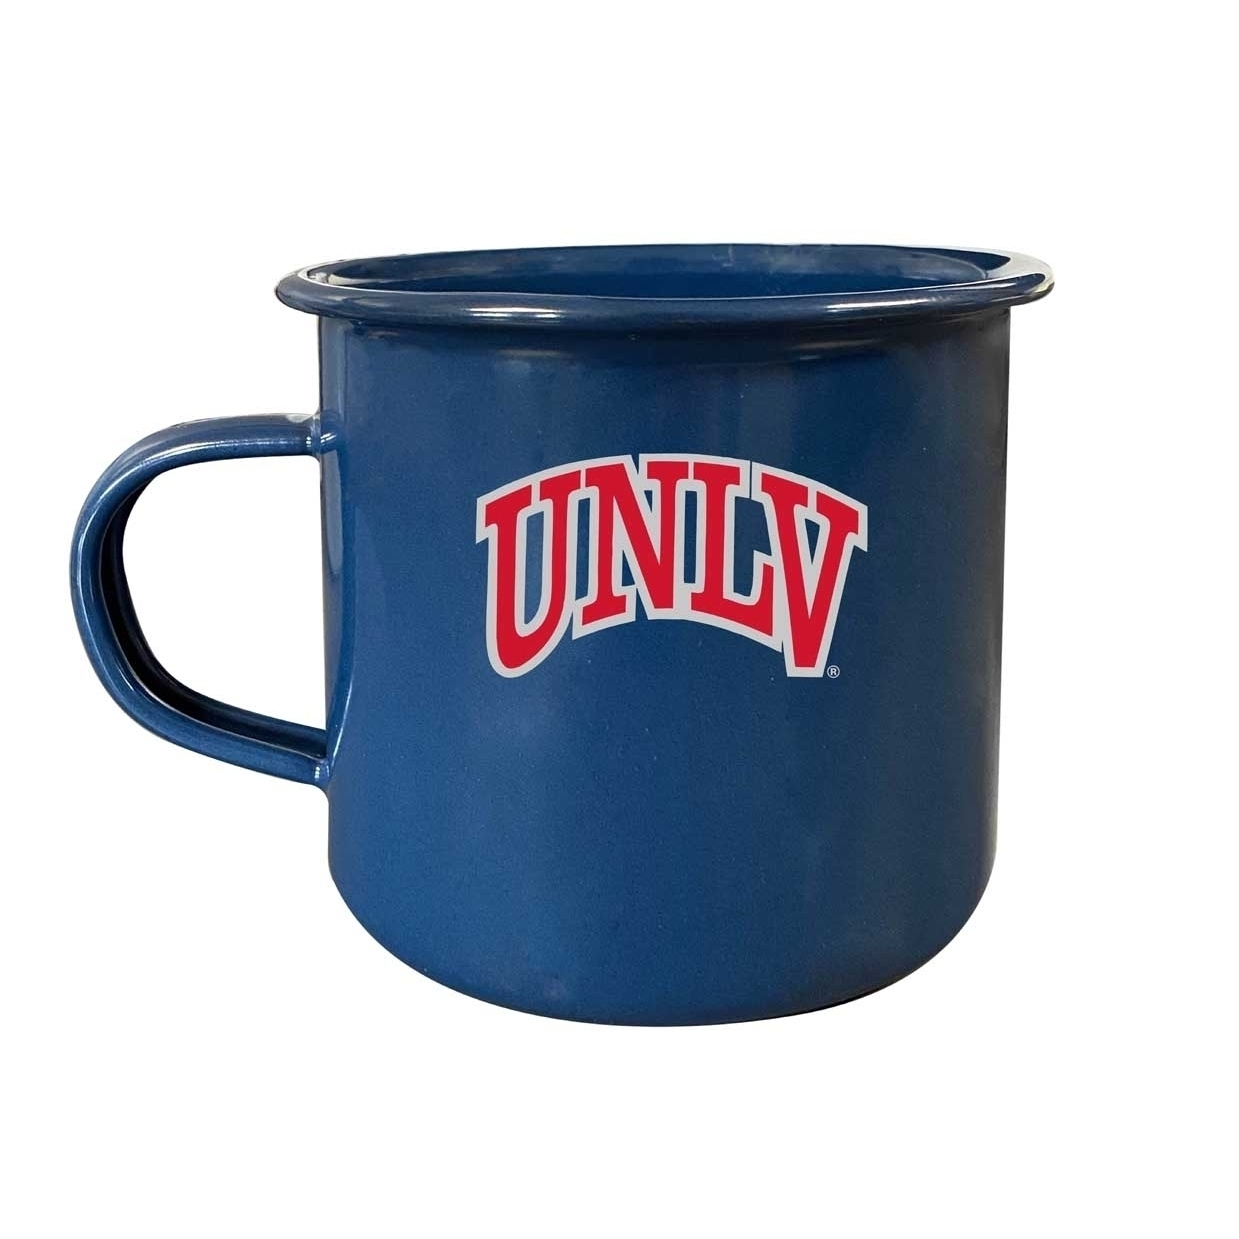 UNLV Rebels Tin Camper Coffee Mug - Choose Your Color - Navy